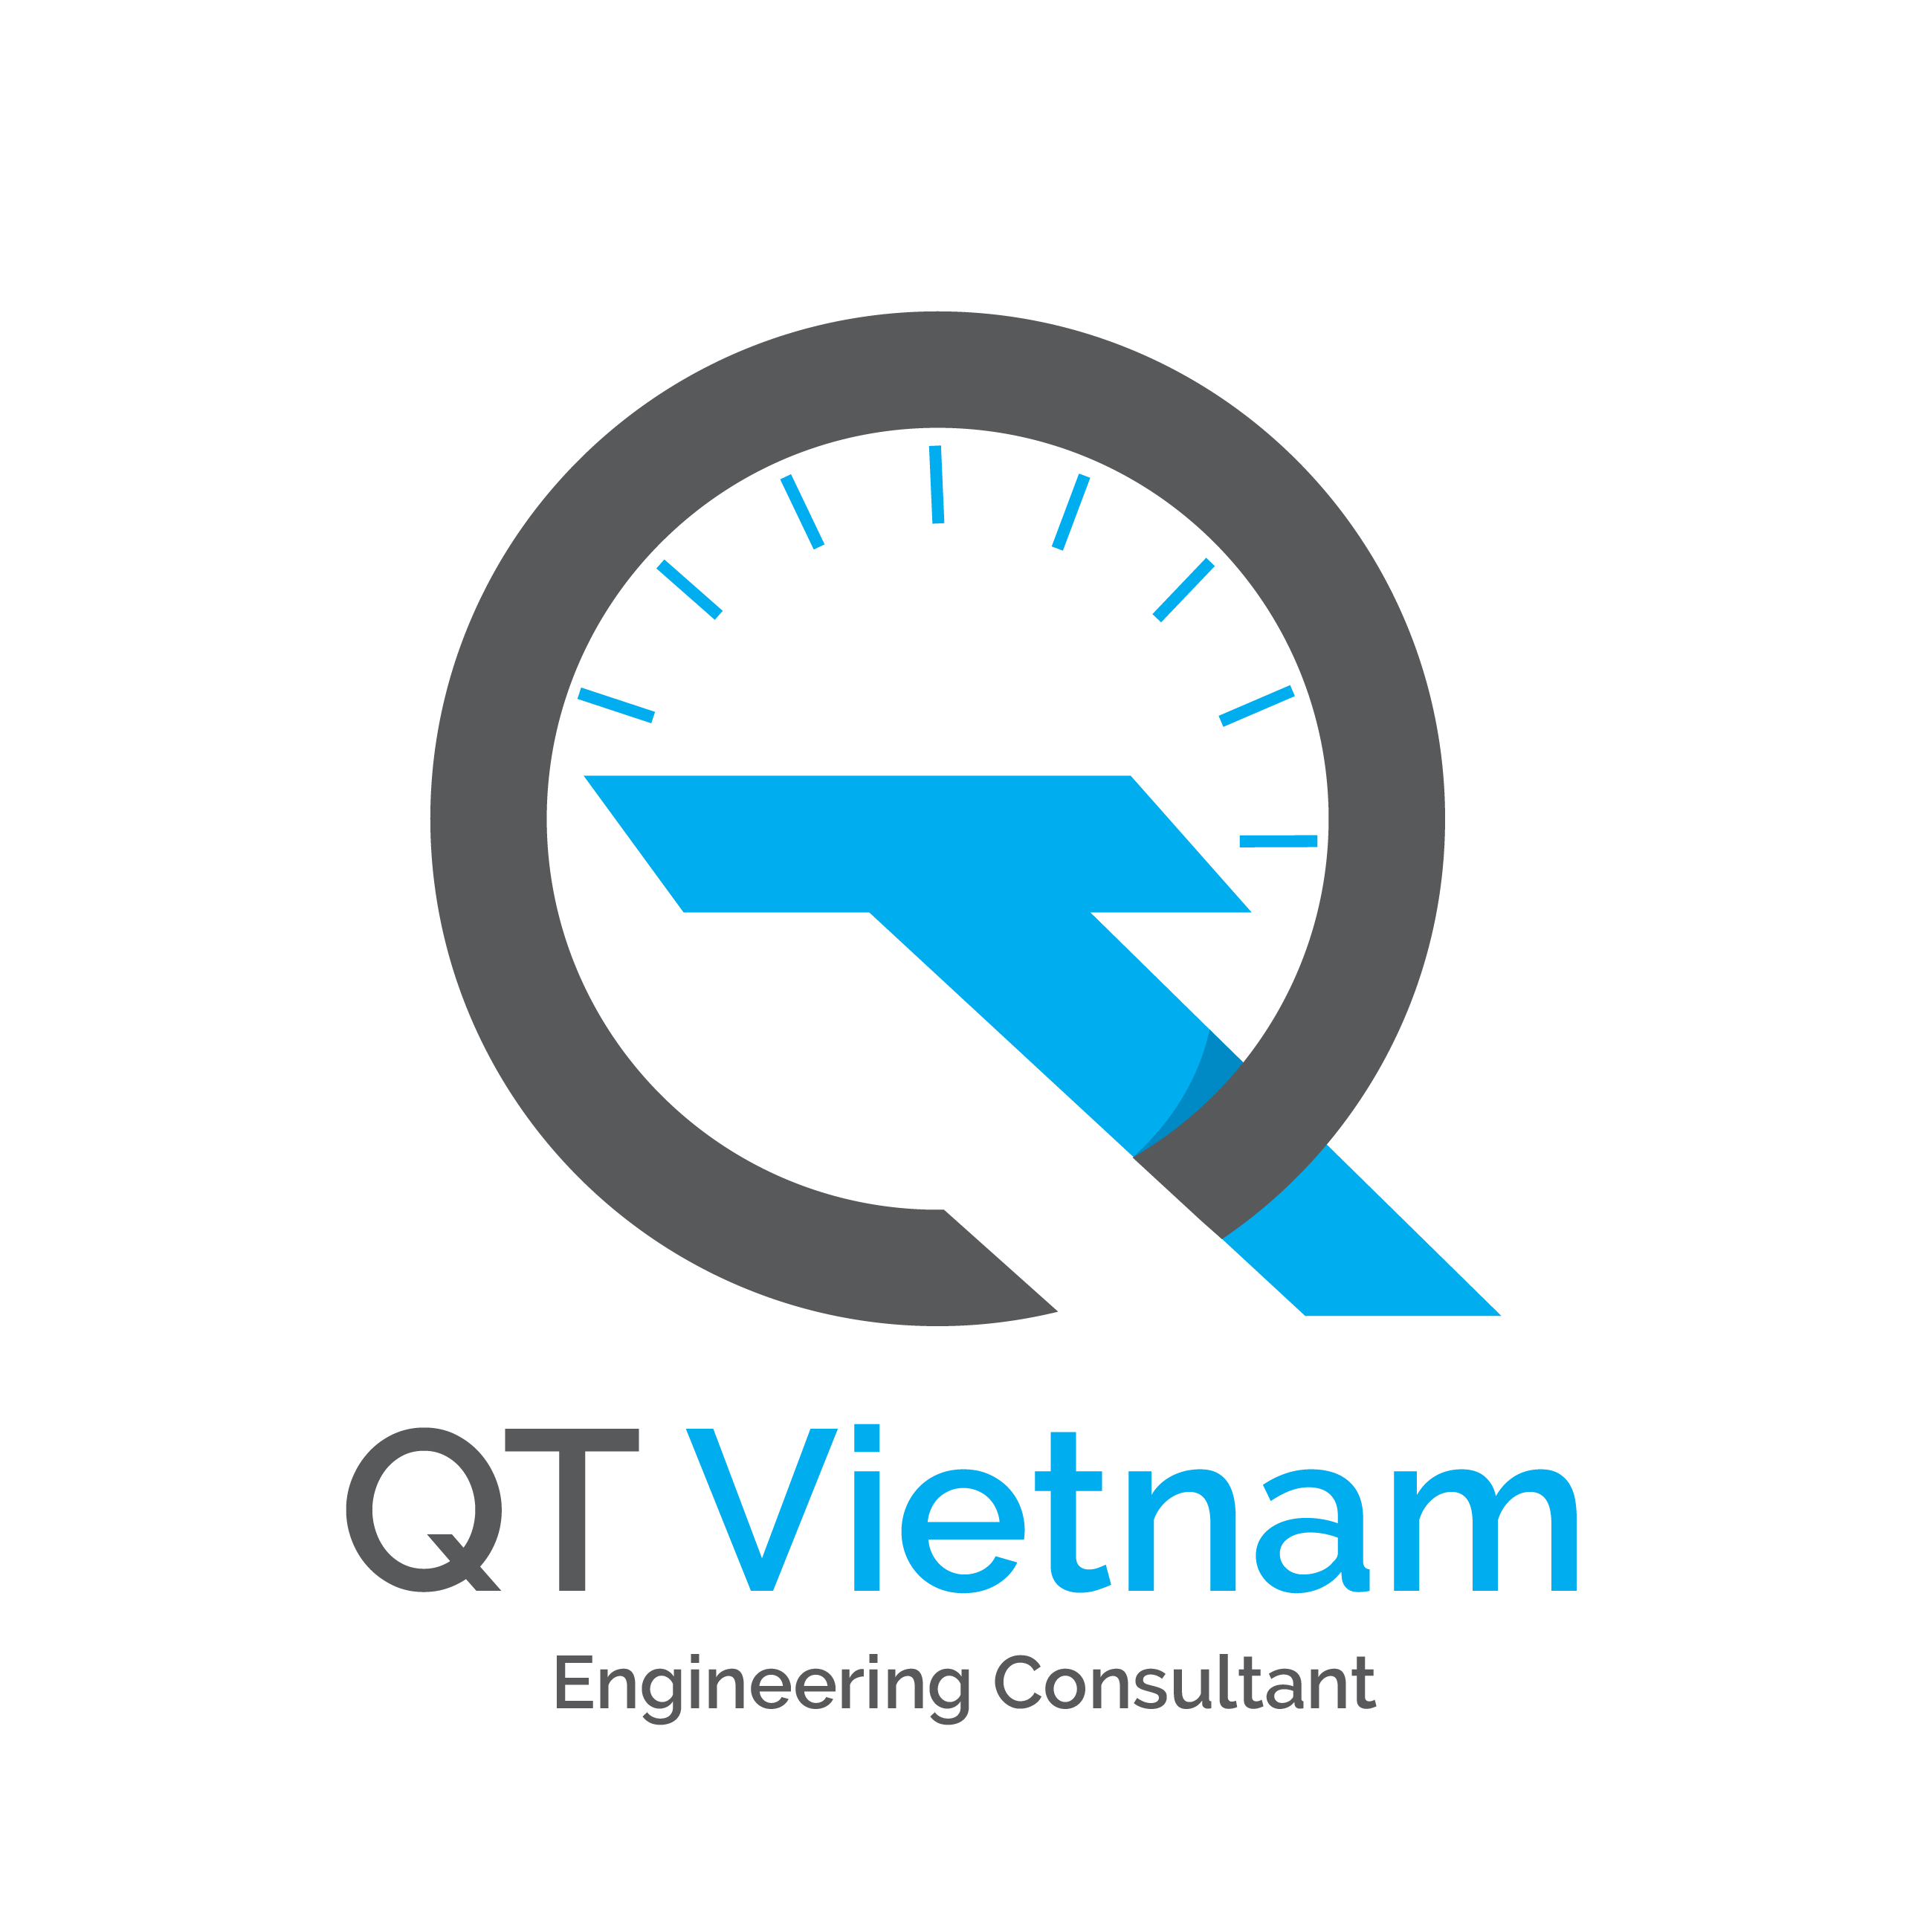 QT Vietnam Consulting and Design Co. Ltd